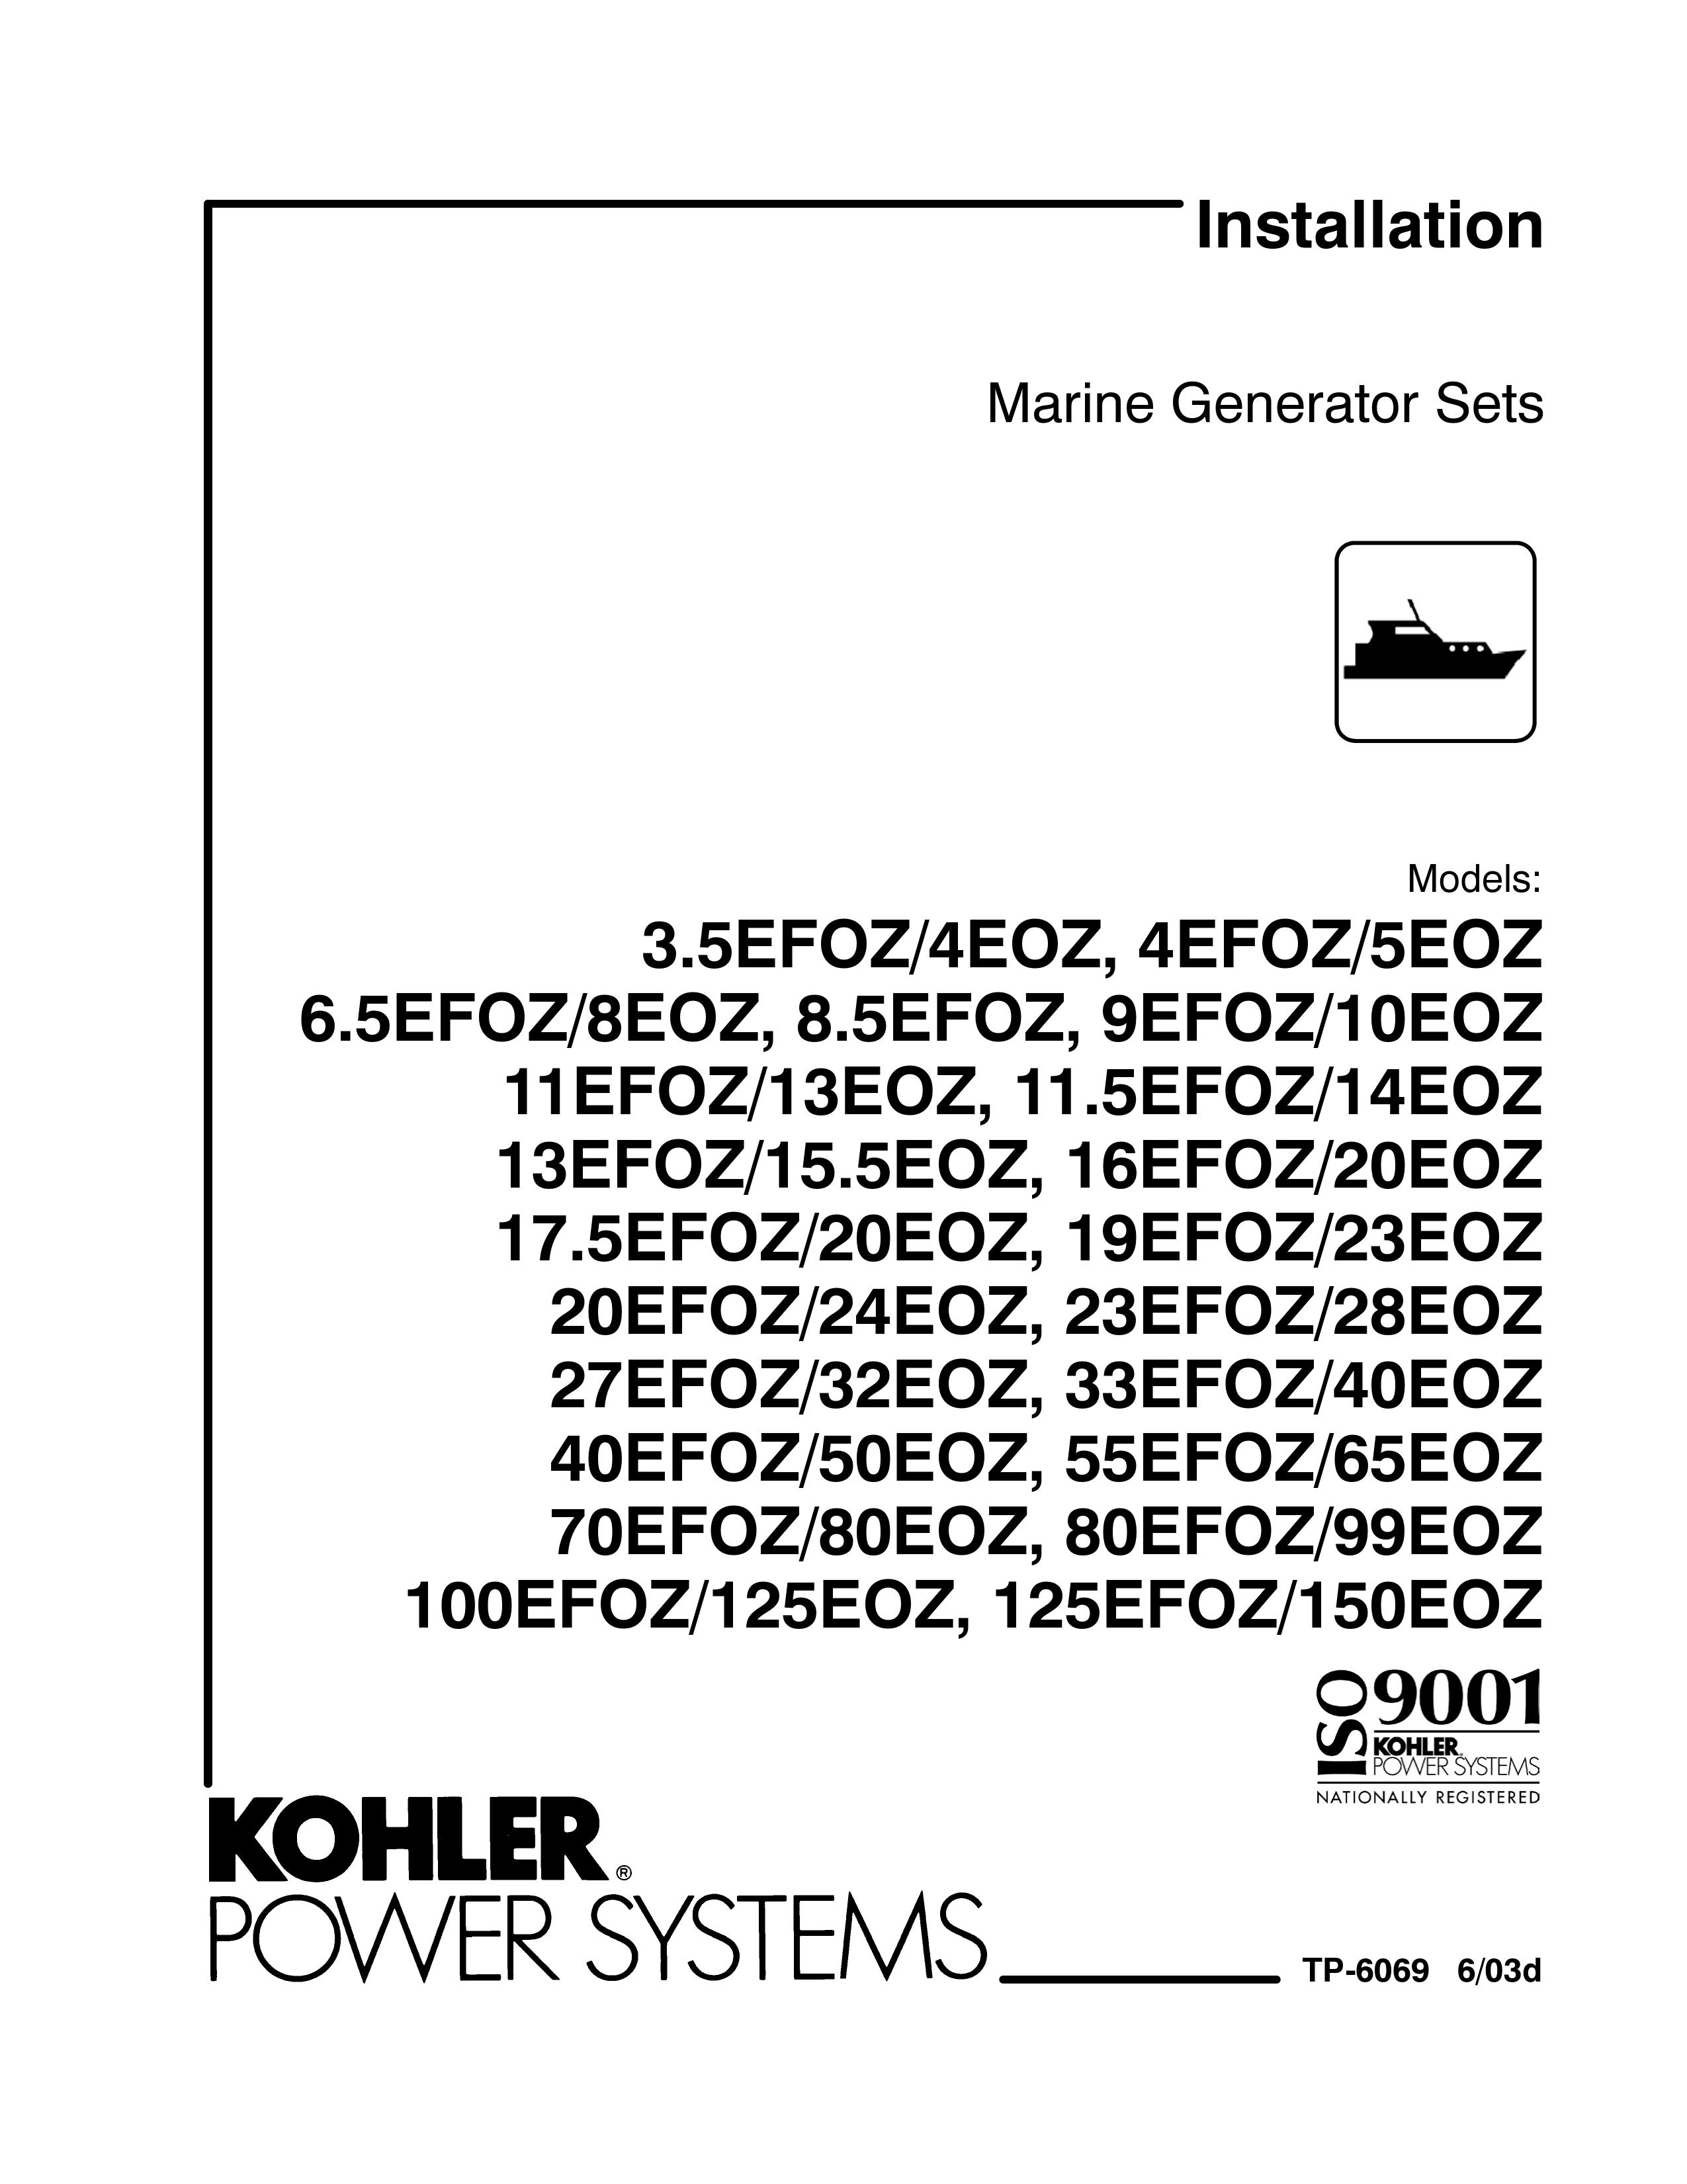 Kohler 13EFOZ/15.5EOZ Portable Generator User Manual